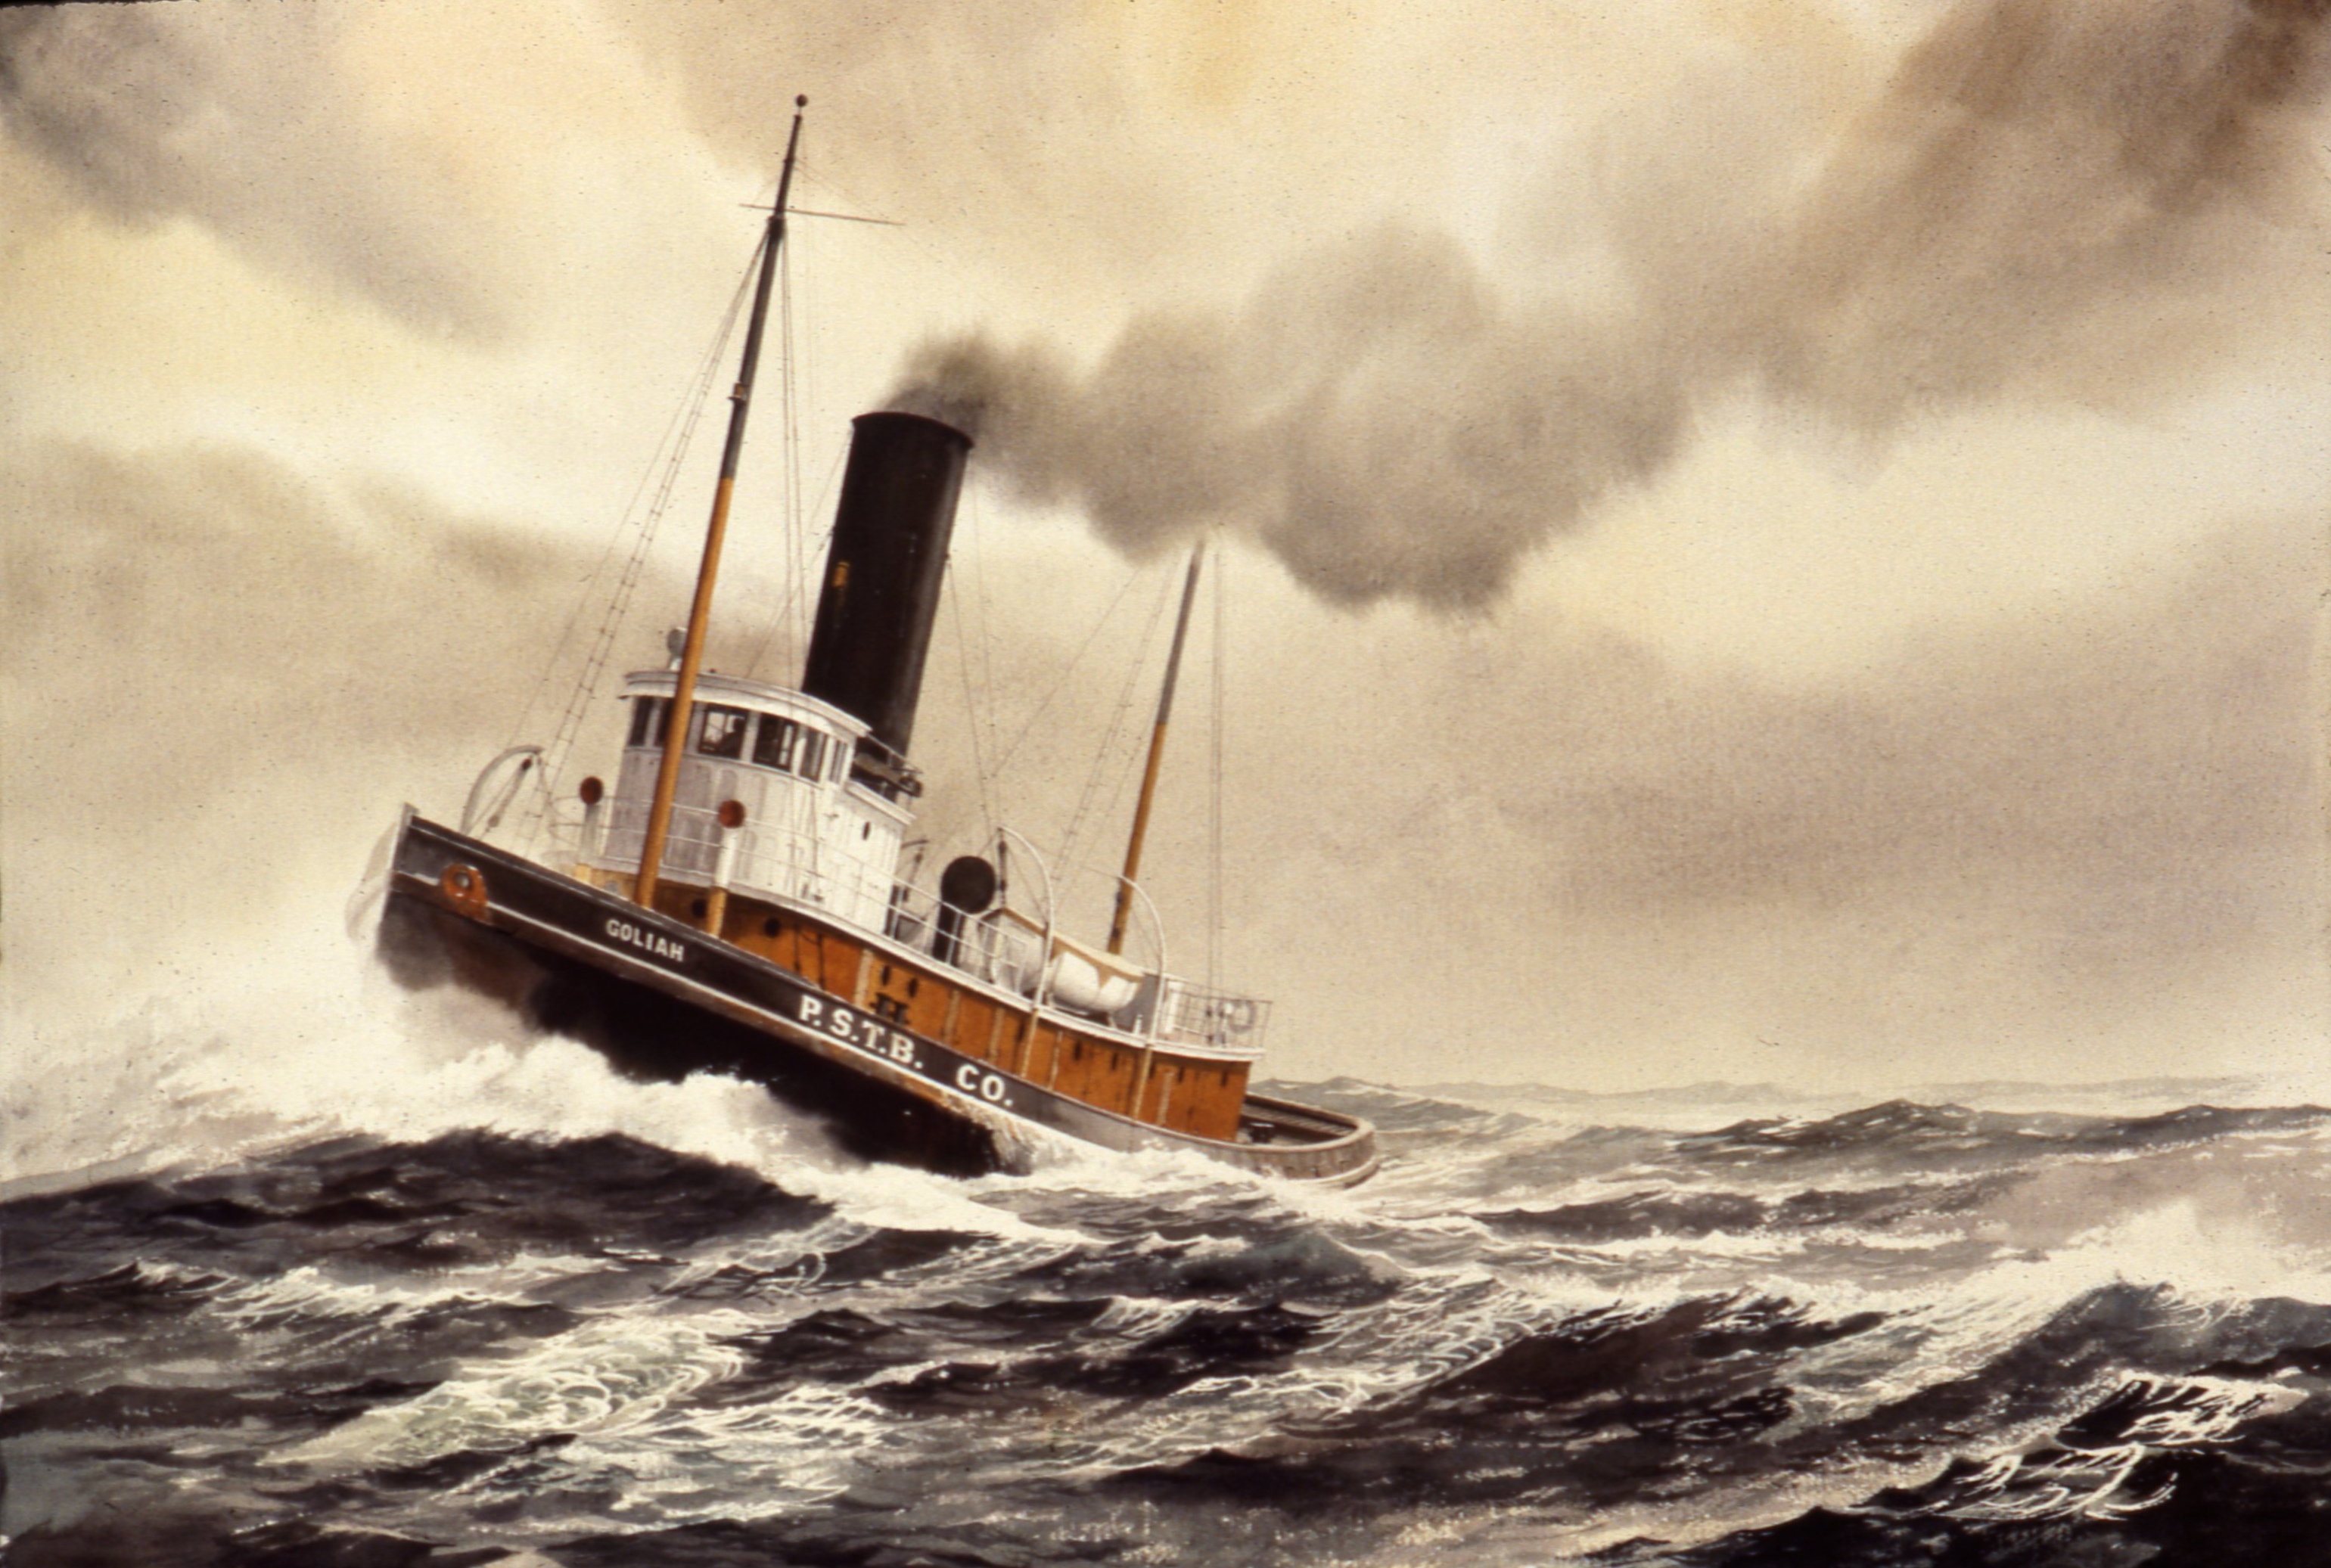 GOLIAH, Steam Tug off Cape Flattery